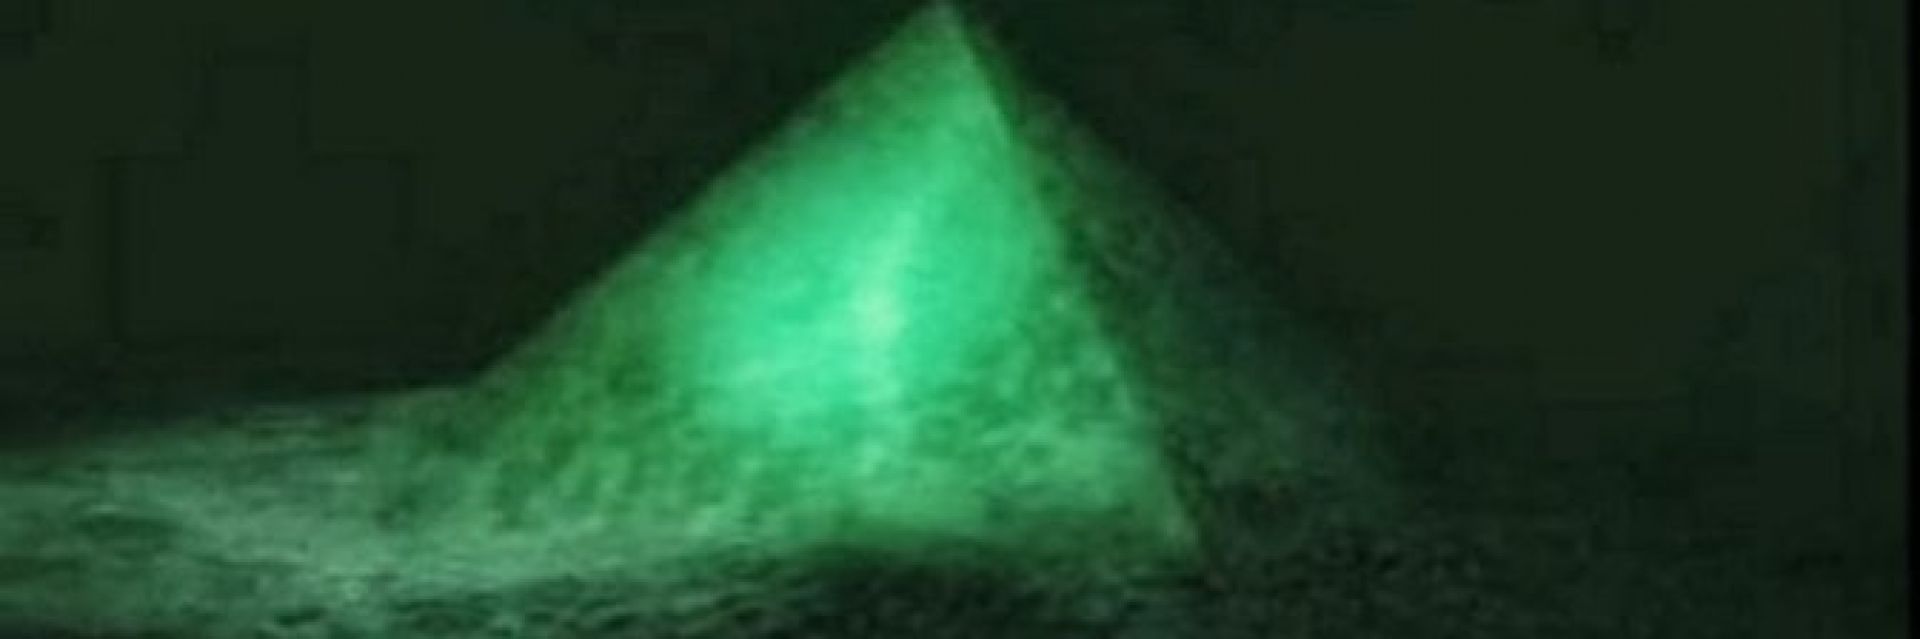 пирамида дне бермудского треугольника